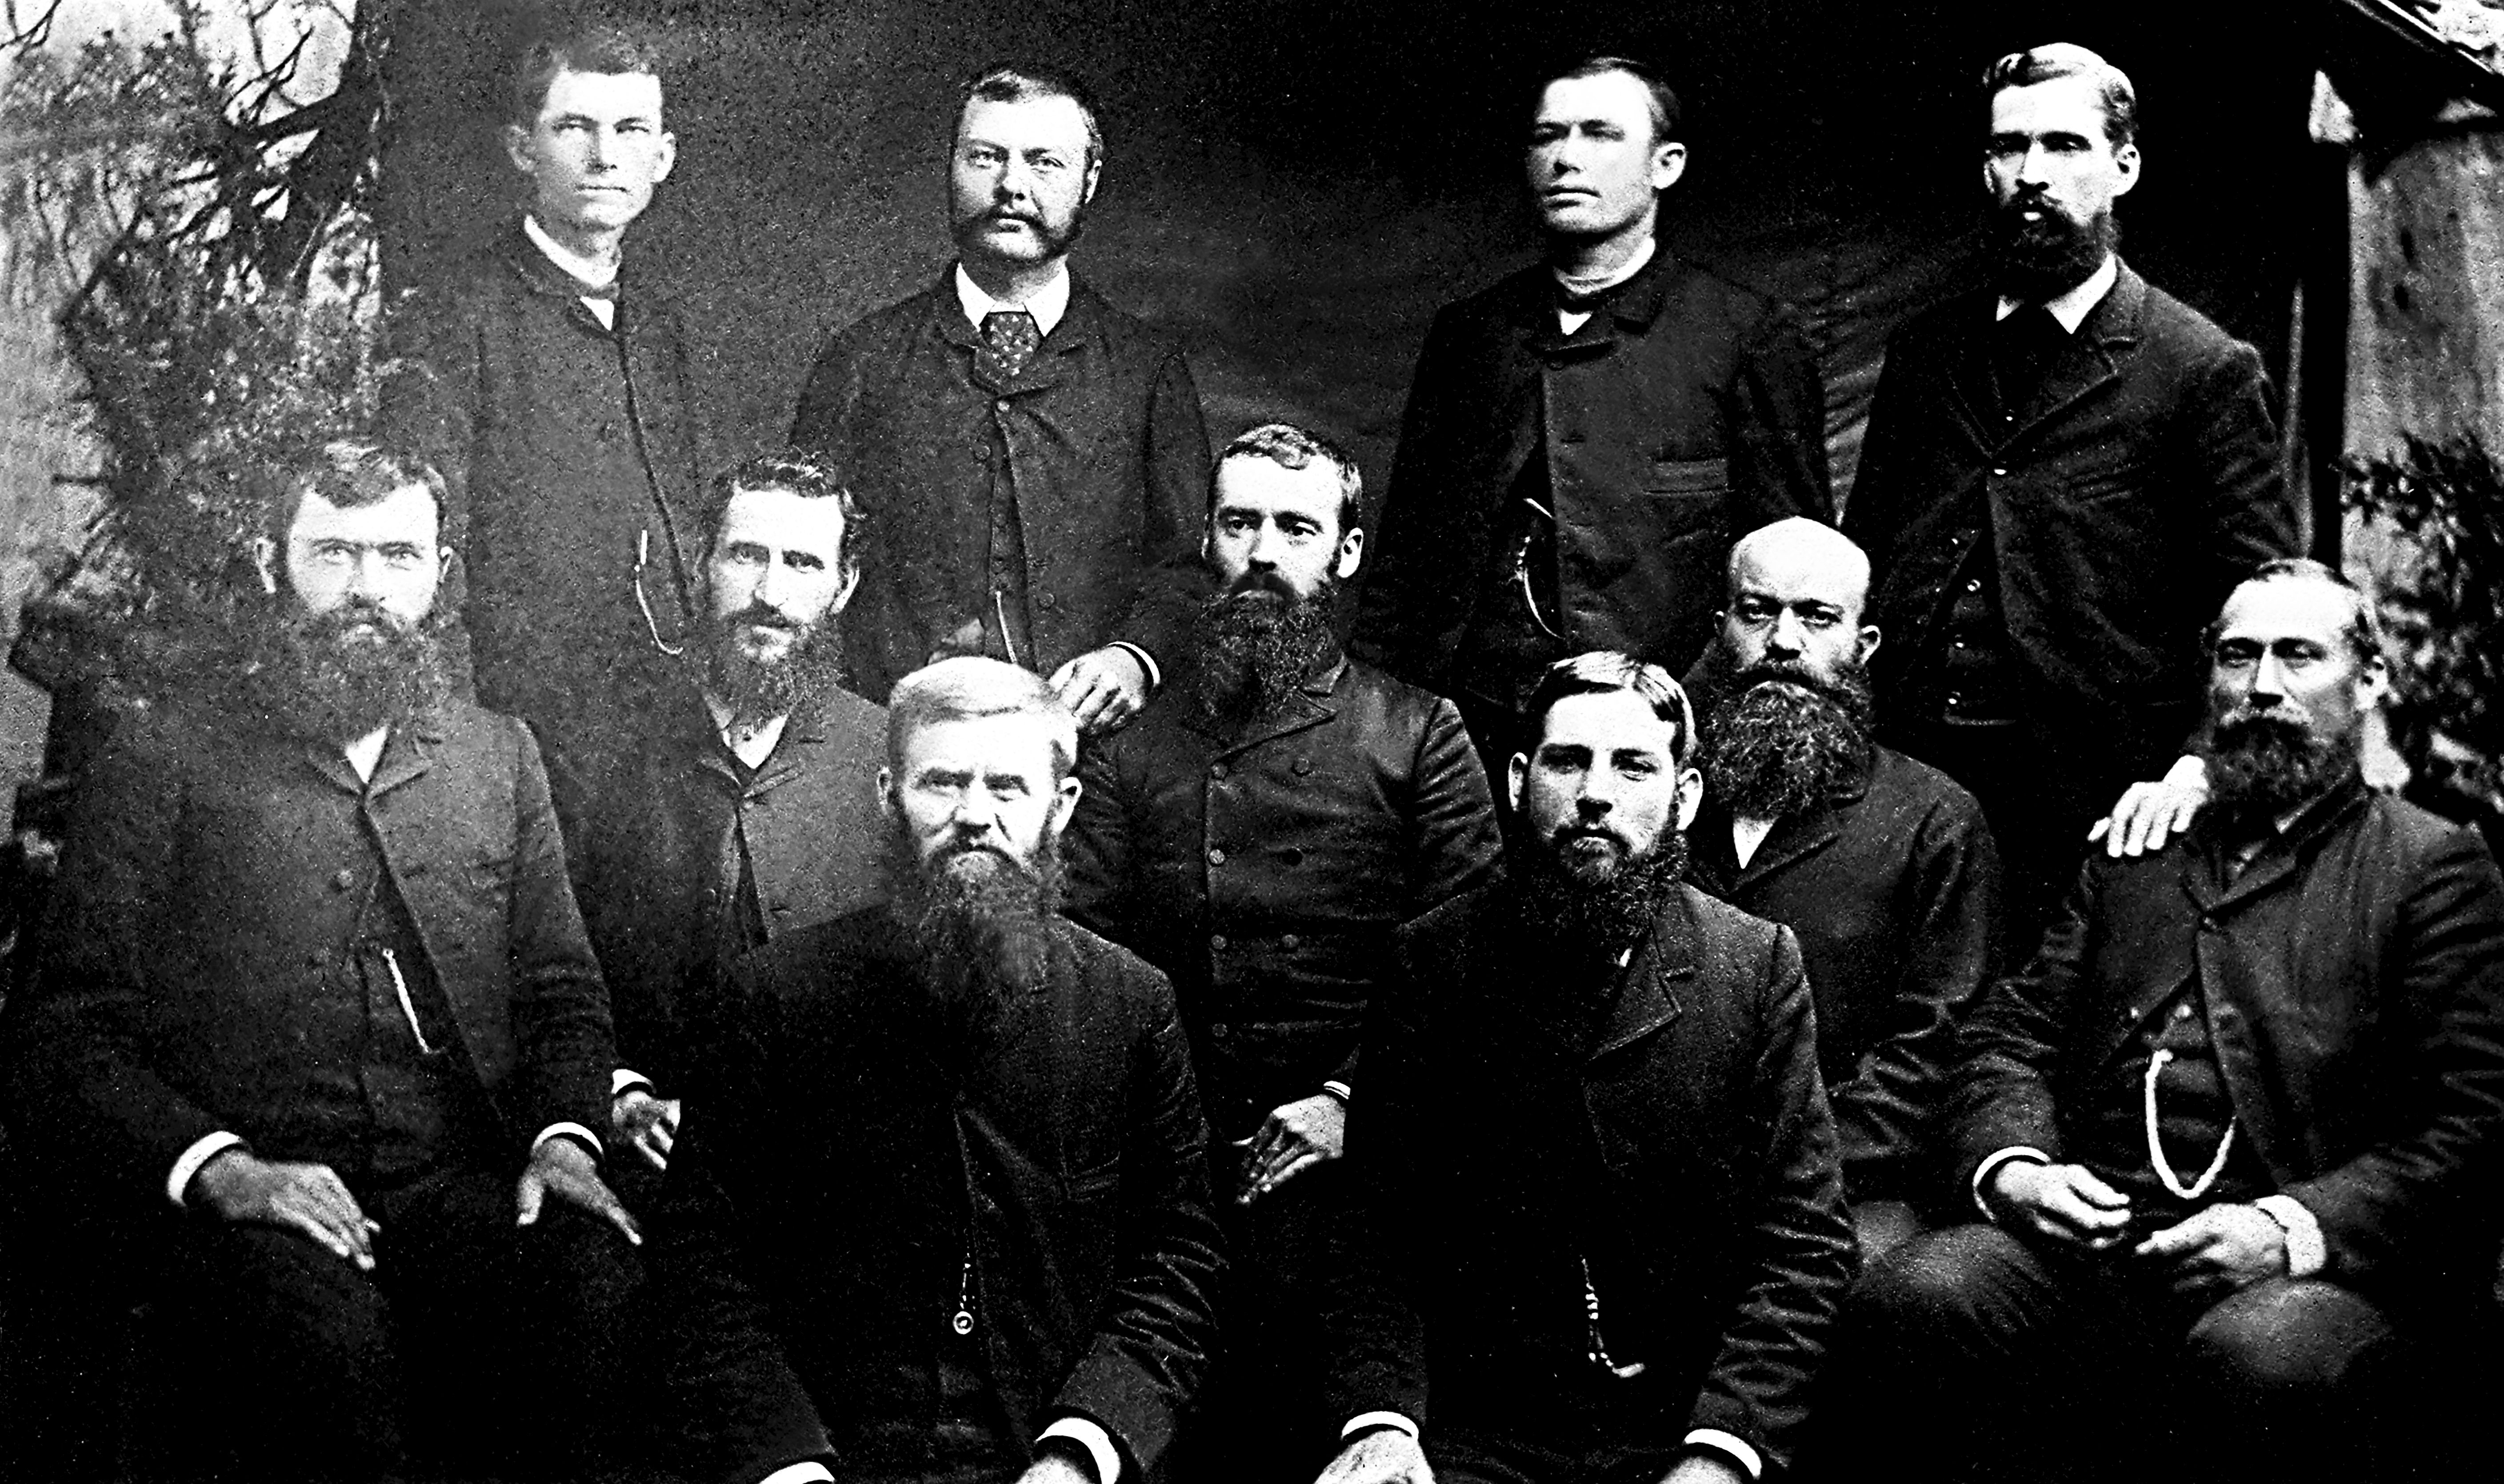 October 21-23, 1888 - South Carolina Conference